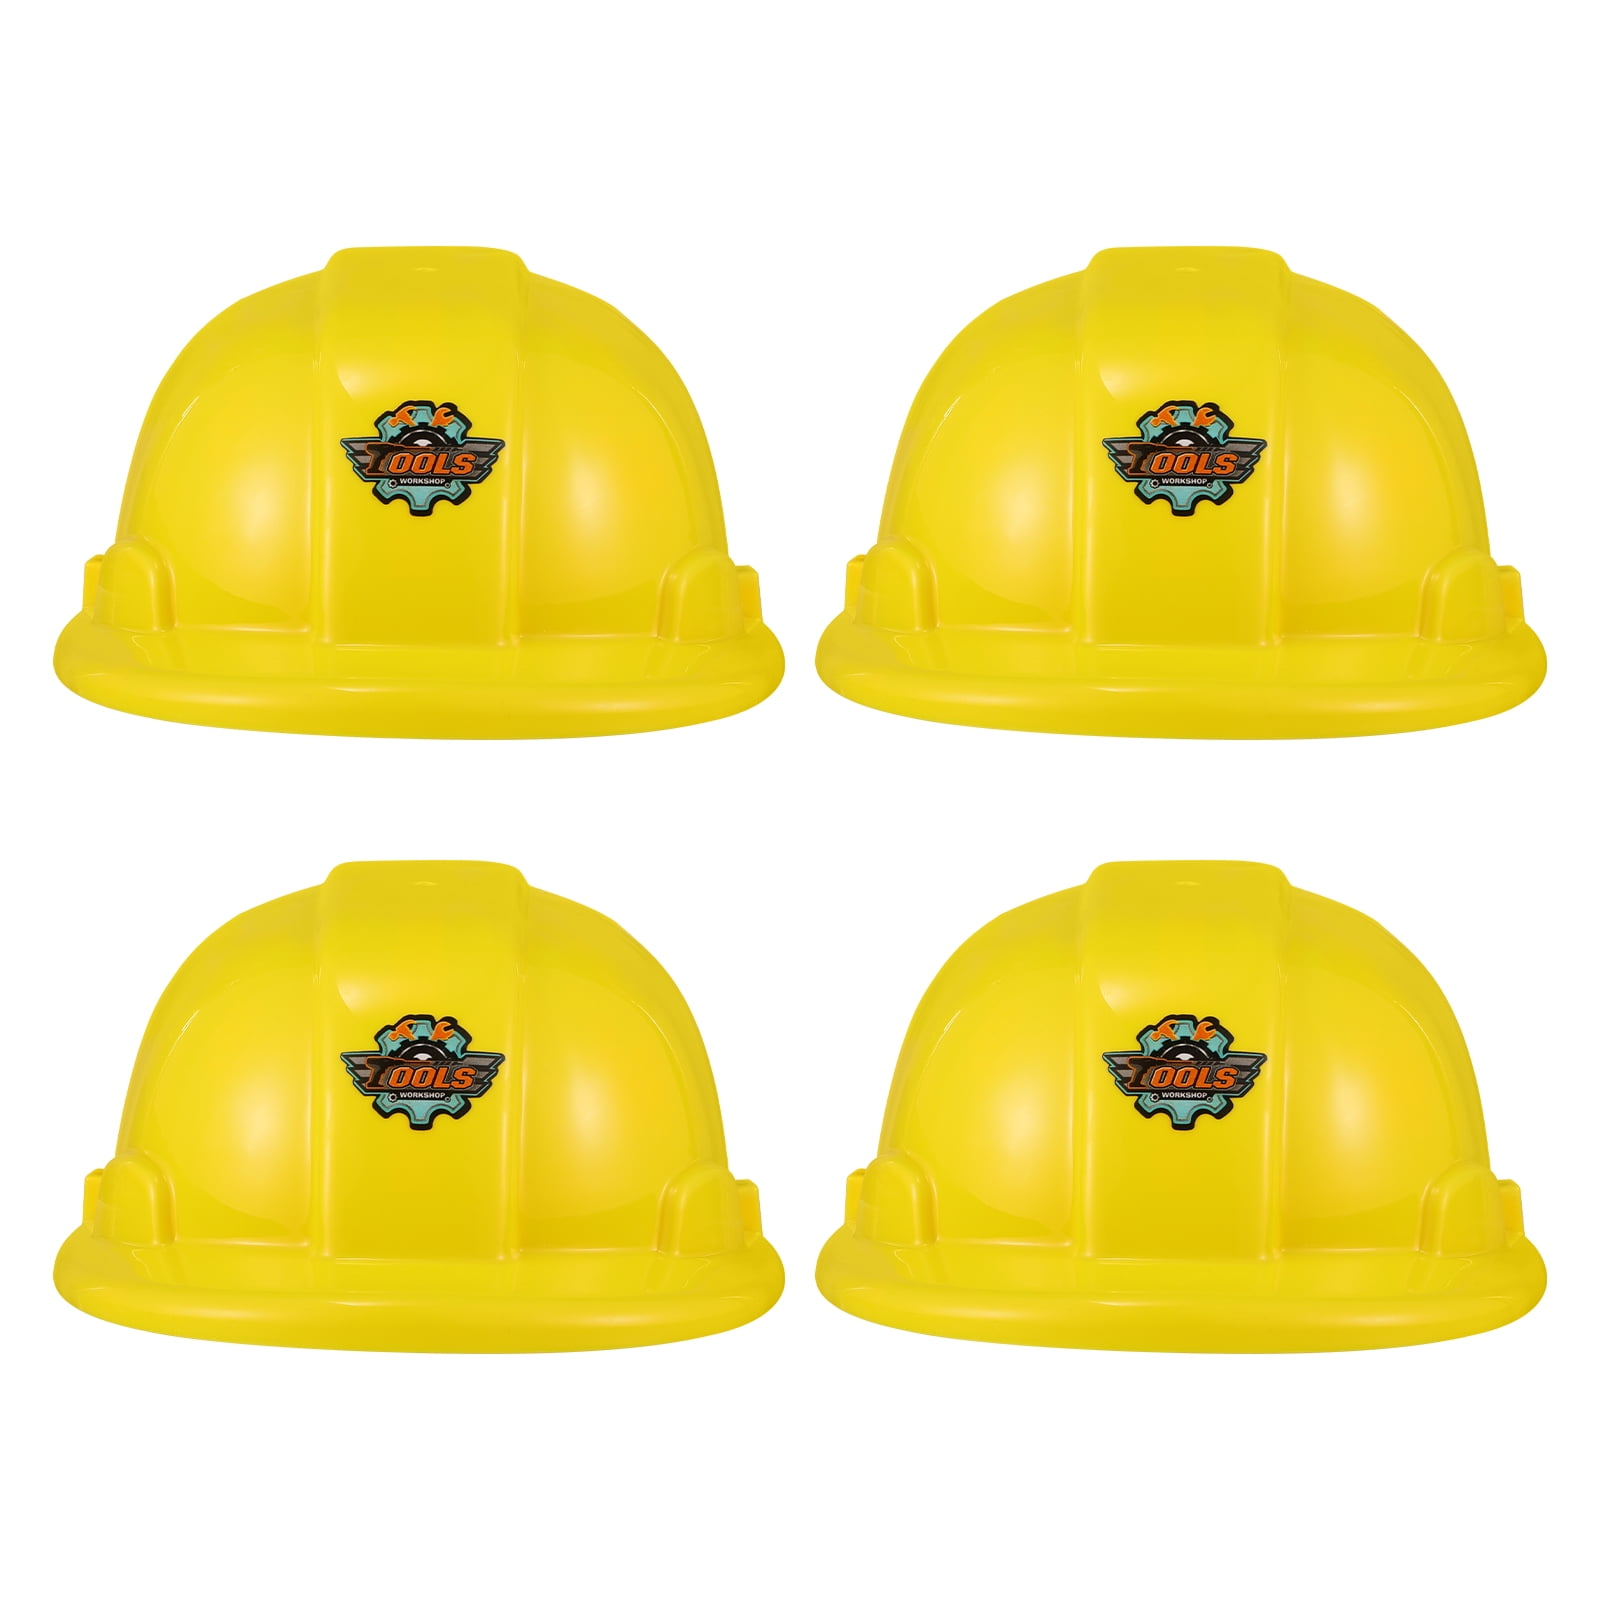 Set of 12 Rhode Island Novelty Childrens Dress Up Soft Plastic Construction Hard Hats